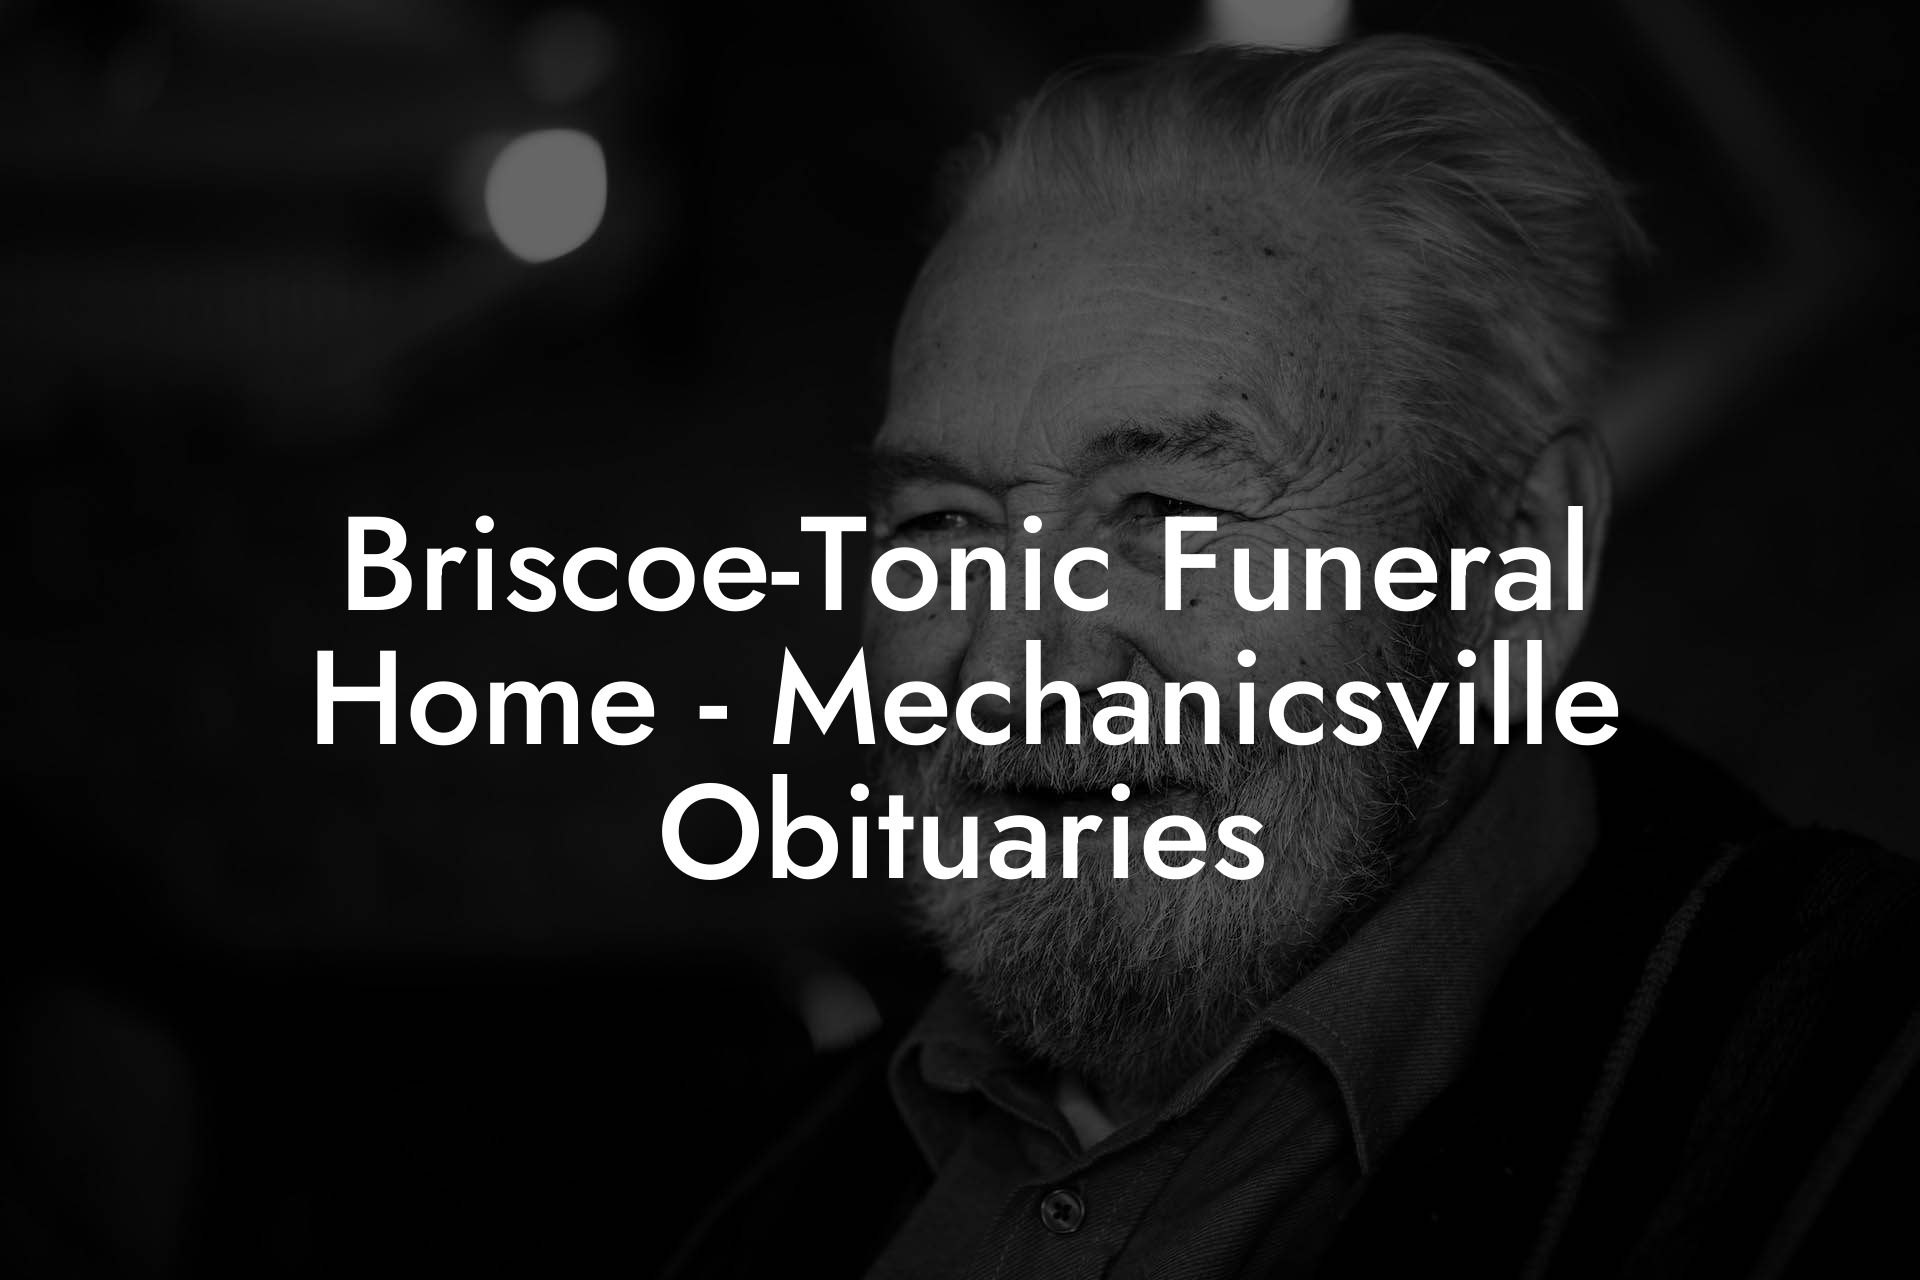 Briscoe-Tonic Funeral Home - Mechanicsville Obituaries